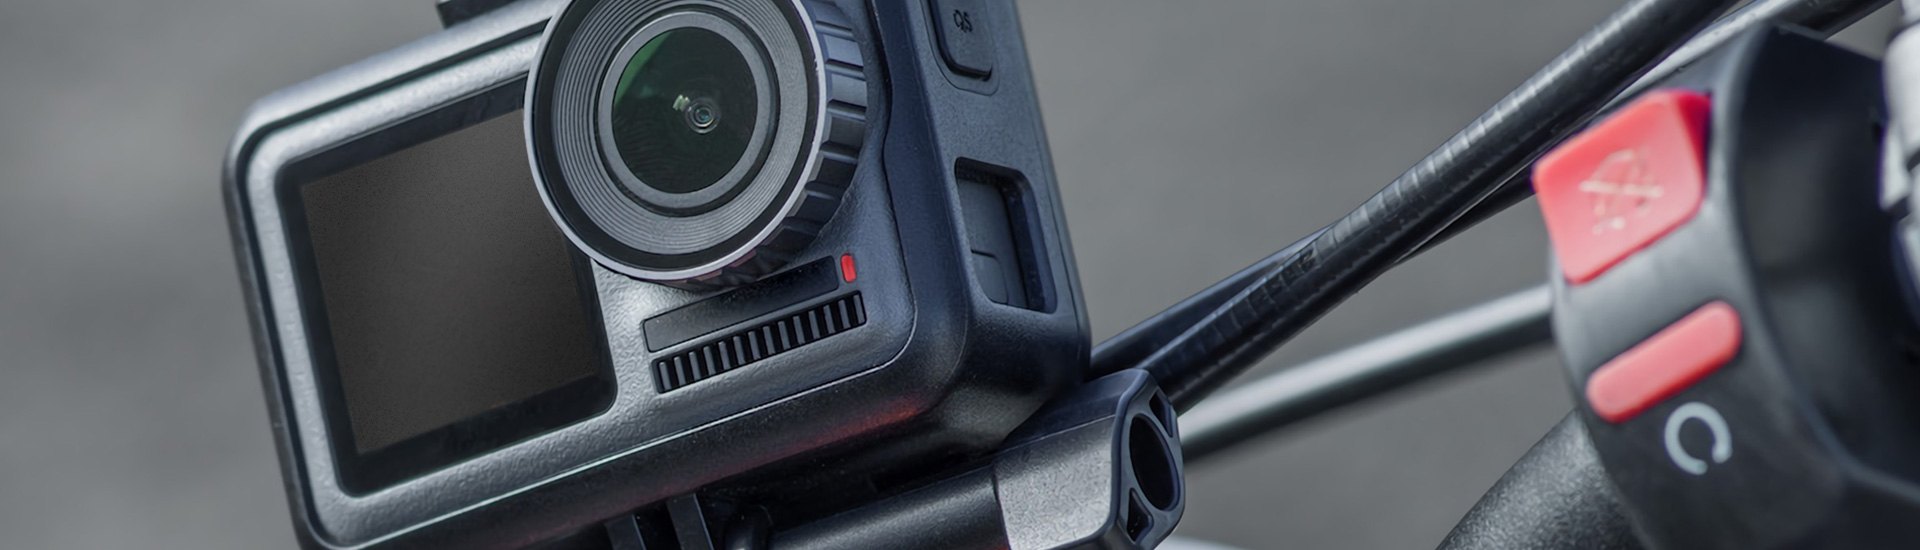 Motorcycle Action Cameras & Accessories